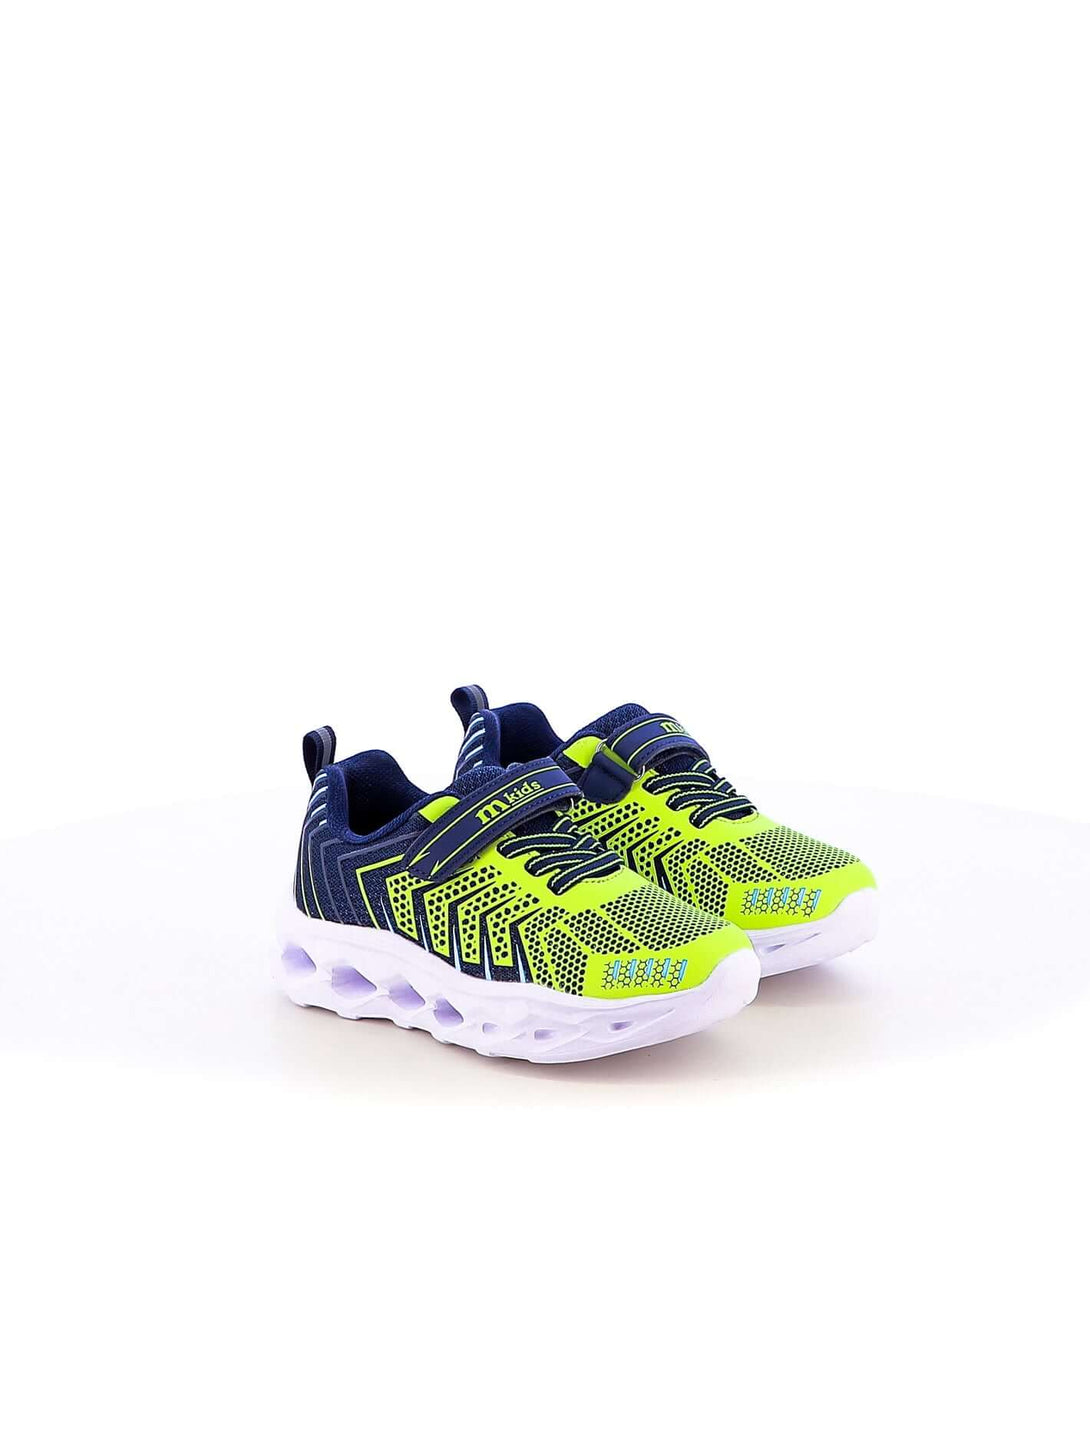 Sneakers con luci bambino MELANIA M2454 verde pastelli lime | Costa Superstore